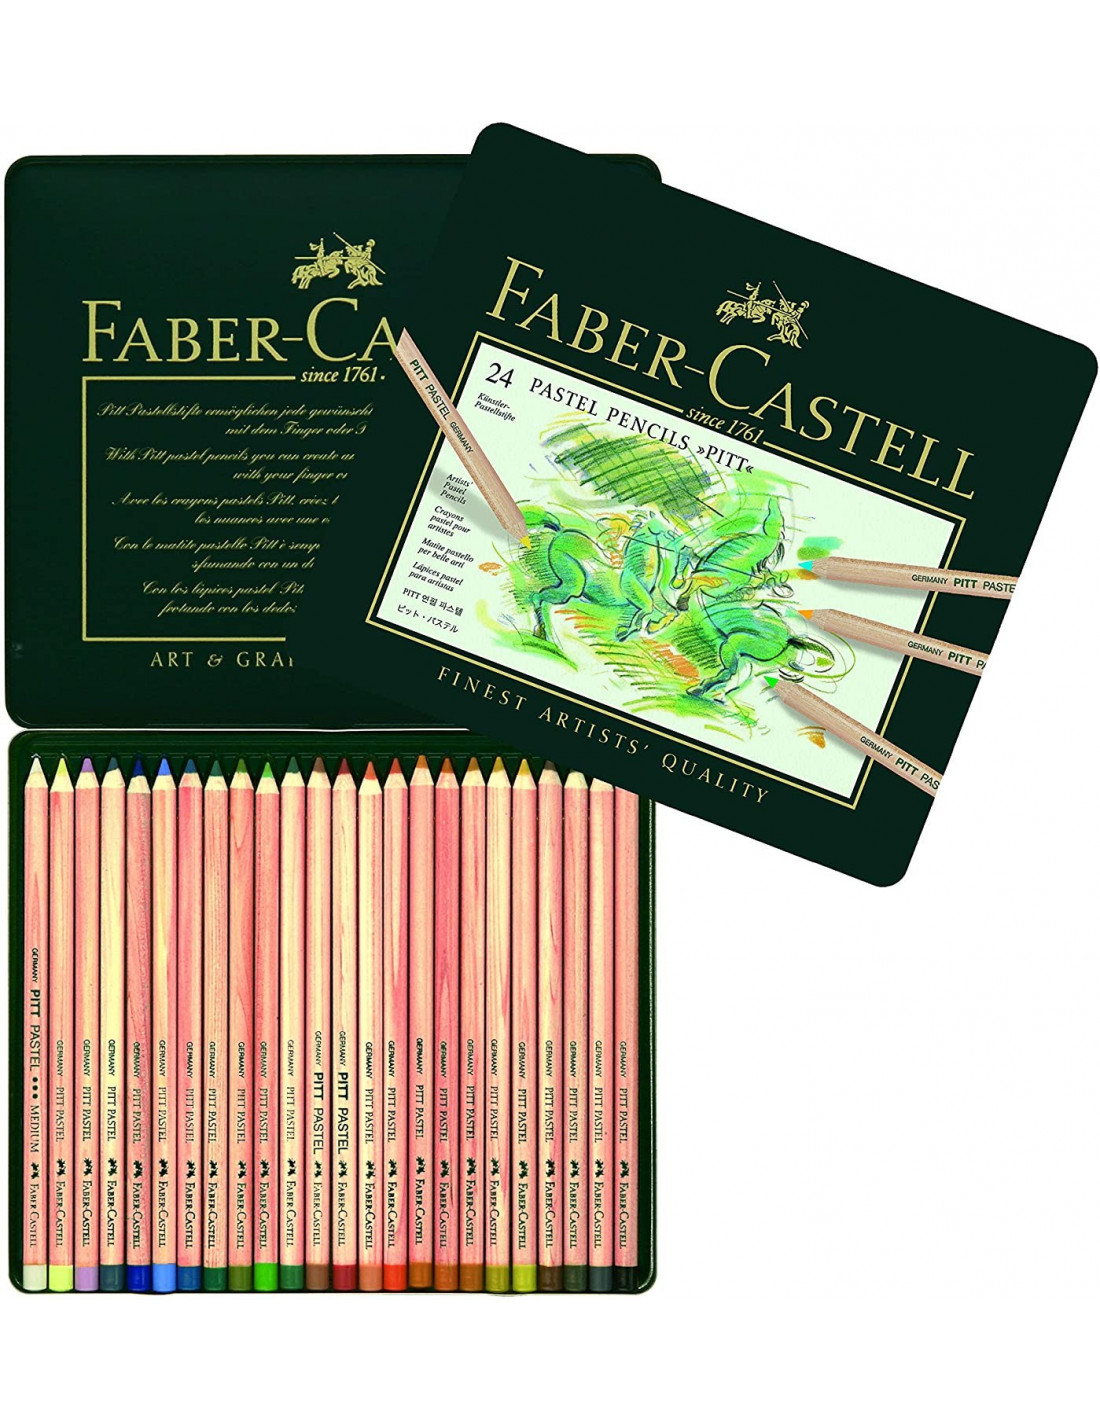 Faber-Castell 112124 Estuche de metal con 24 ecolápices Pitt pastel multicolor mini multicolor 128272 Estuche de cartón con 72 tizas pastel 